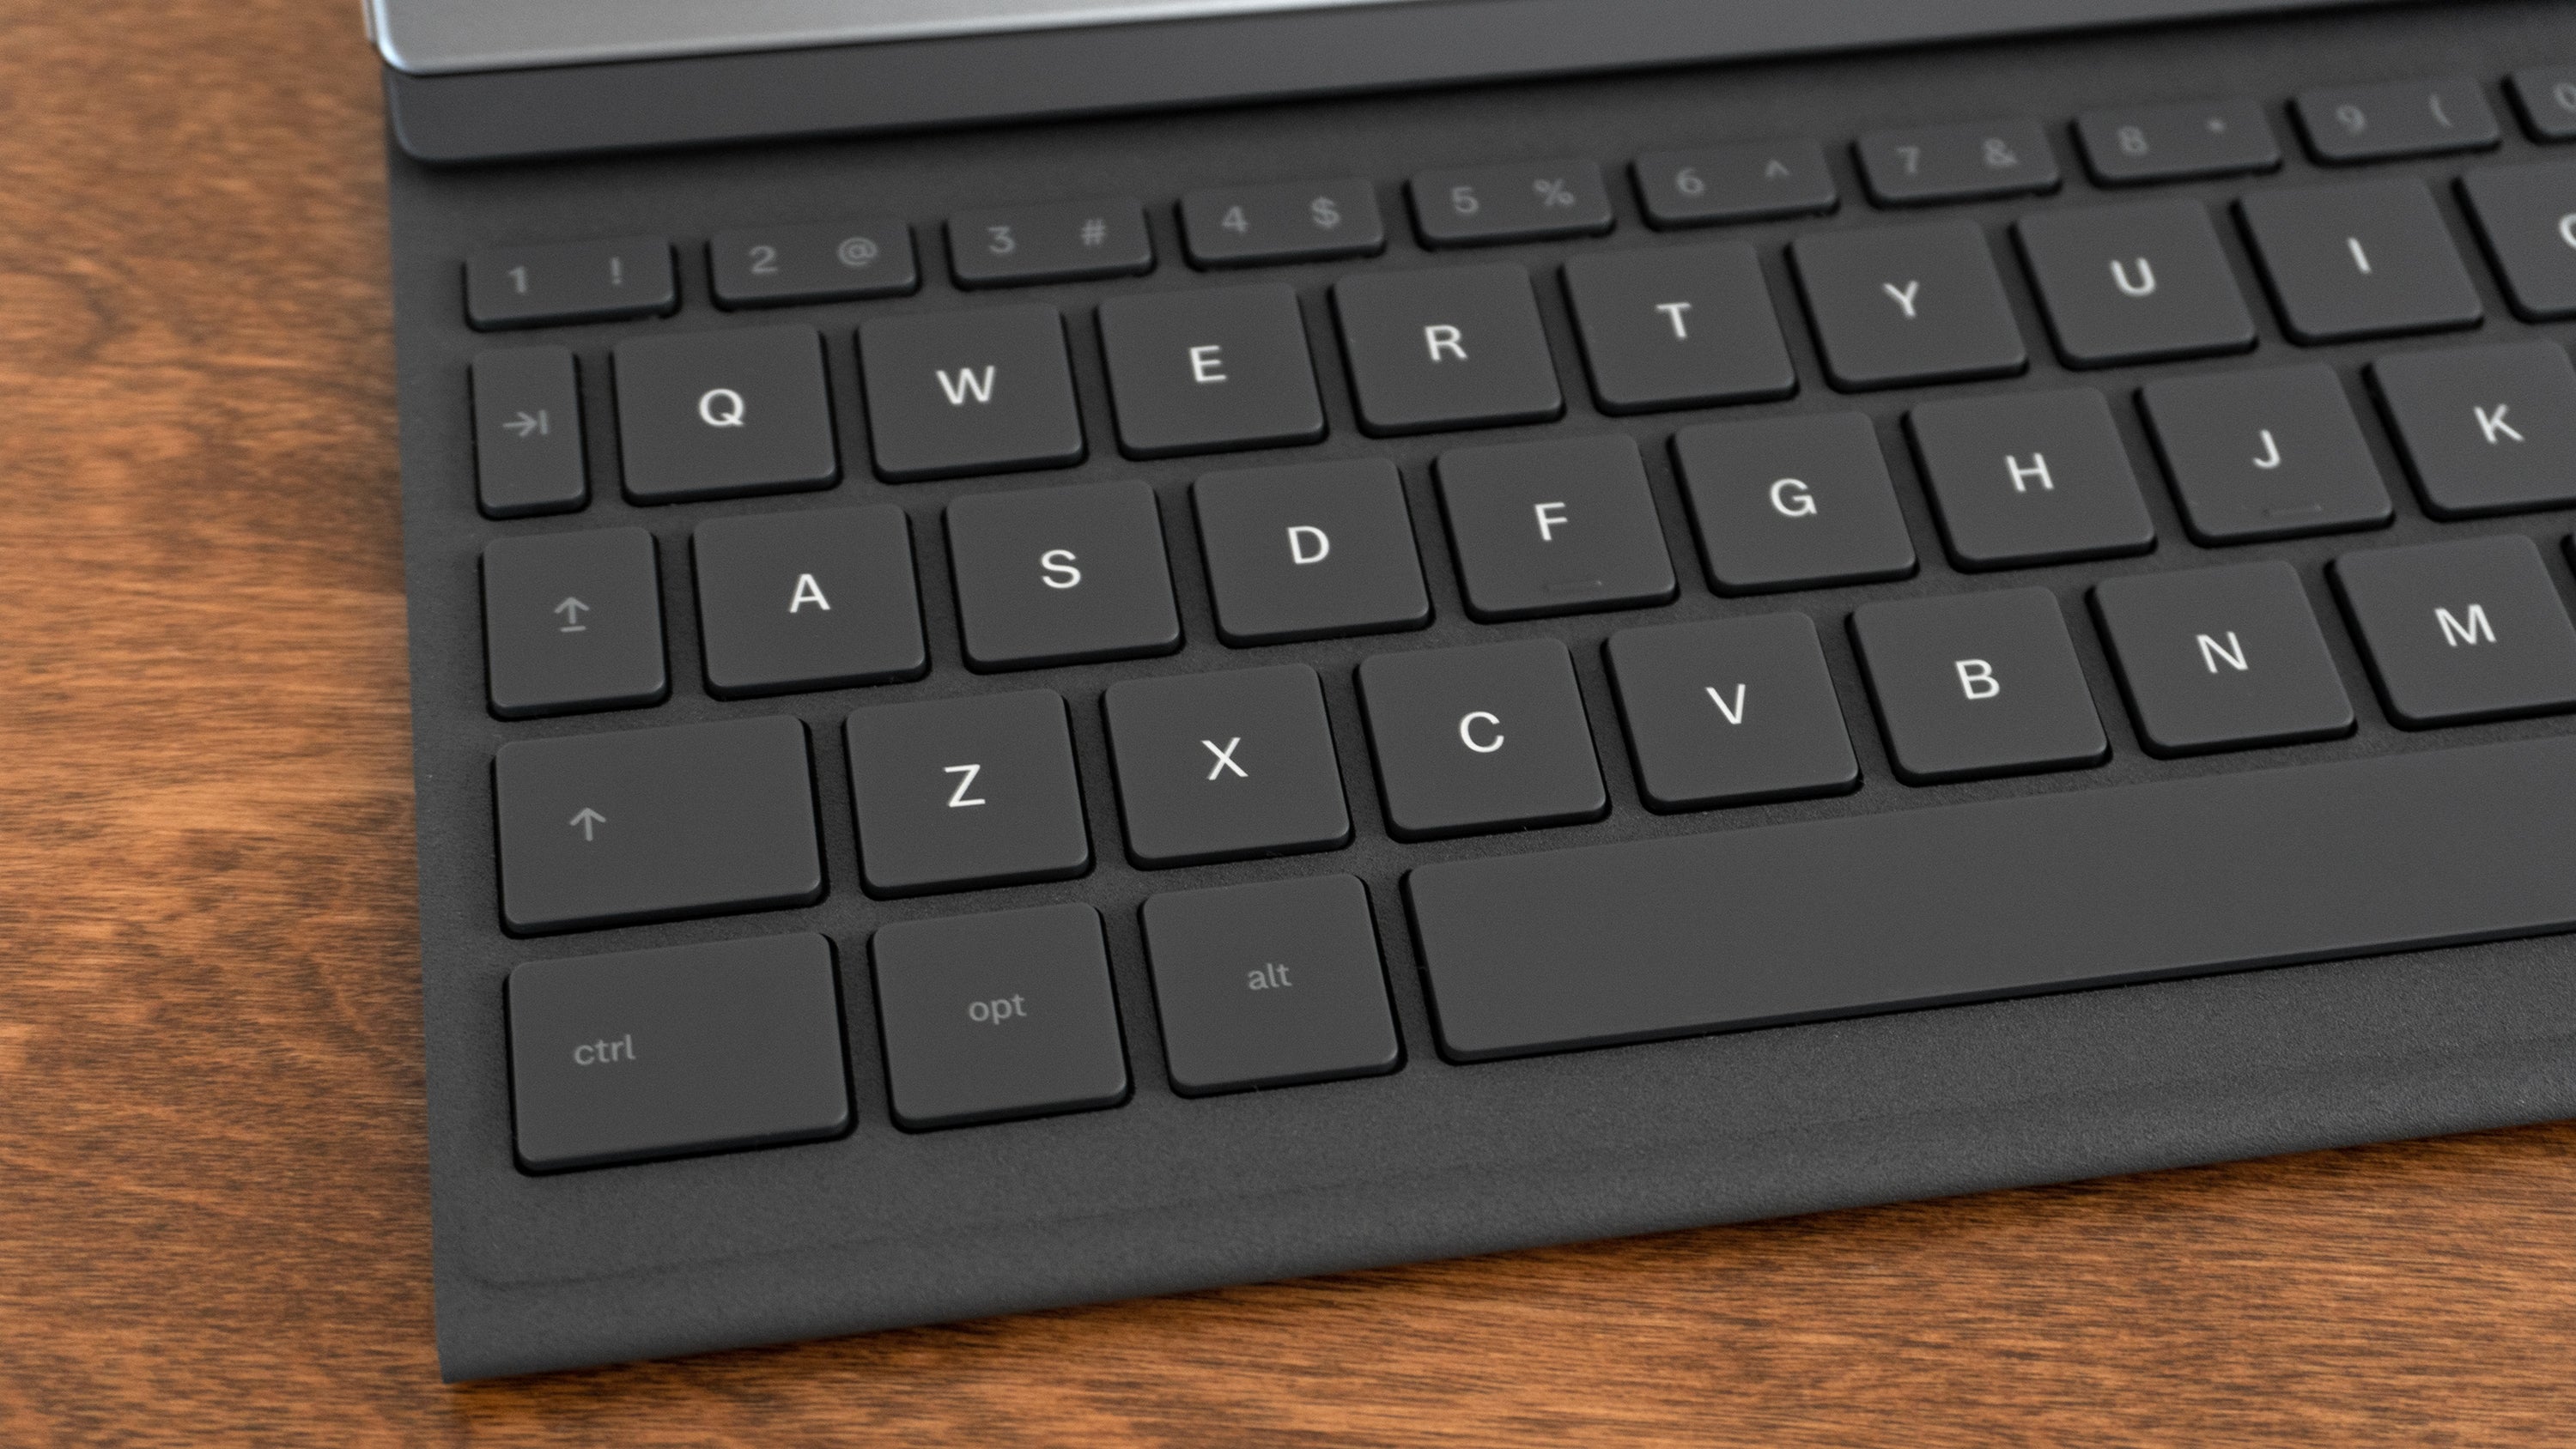 The Type Folio keyboard case features full-sized keys with 1.3mm of travel. (Photo: Andrew Liszewski | Gizmodo)